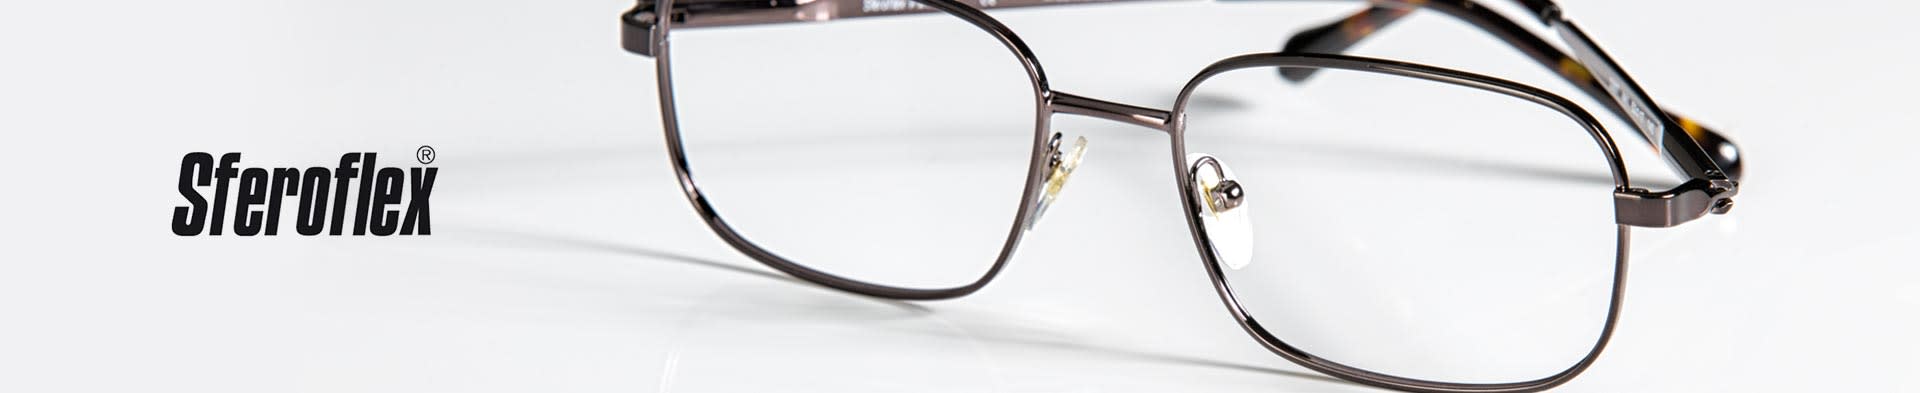 Shop Sferoflex Eyeglasses - model SF2267 featured